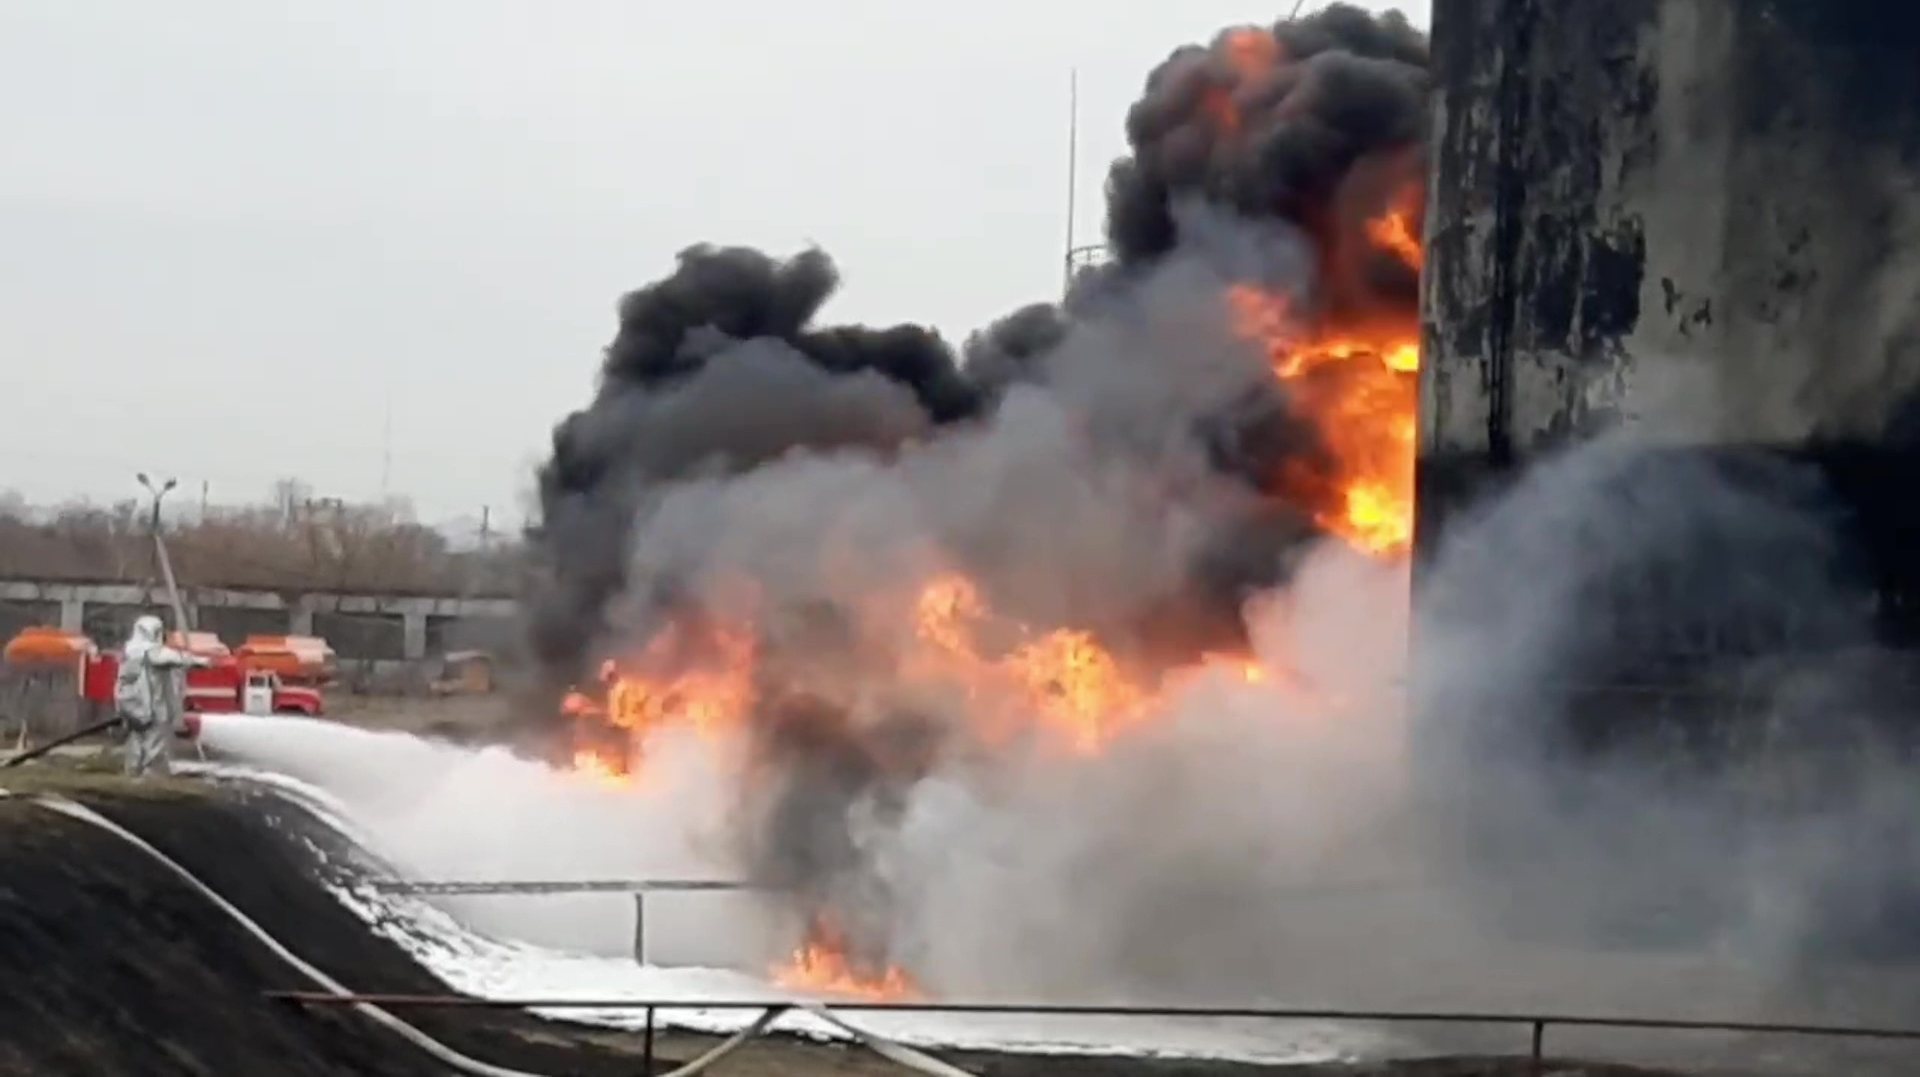 Ukraine strikes fuel depot in Russia&#039;s Belgorod, regional governor says